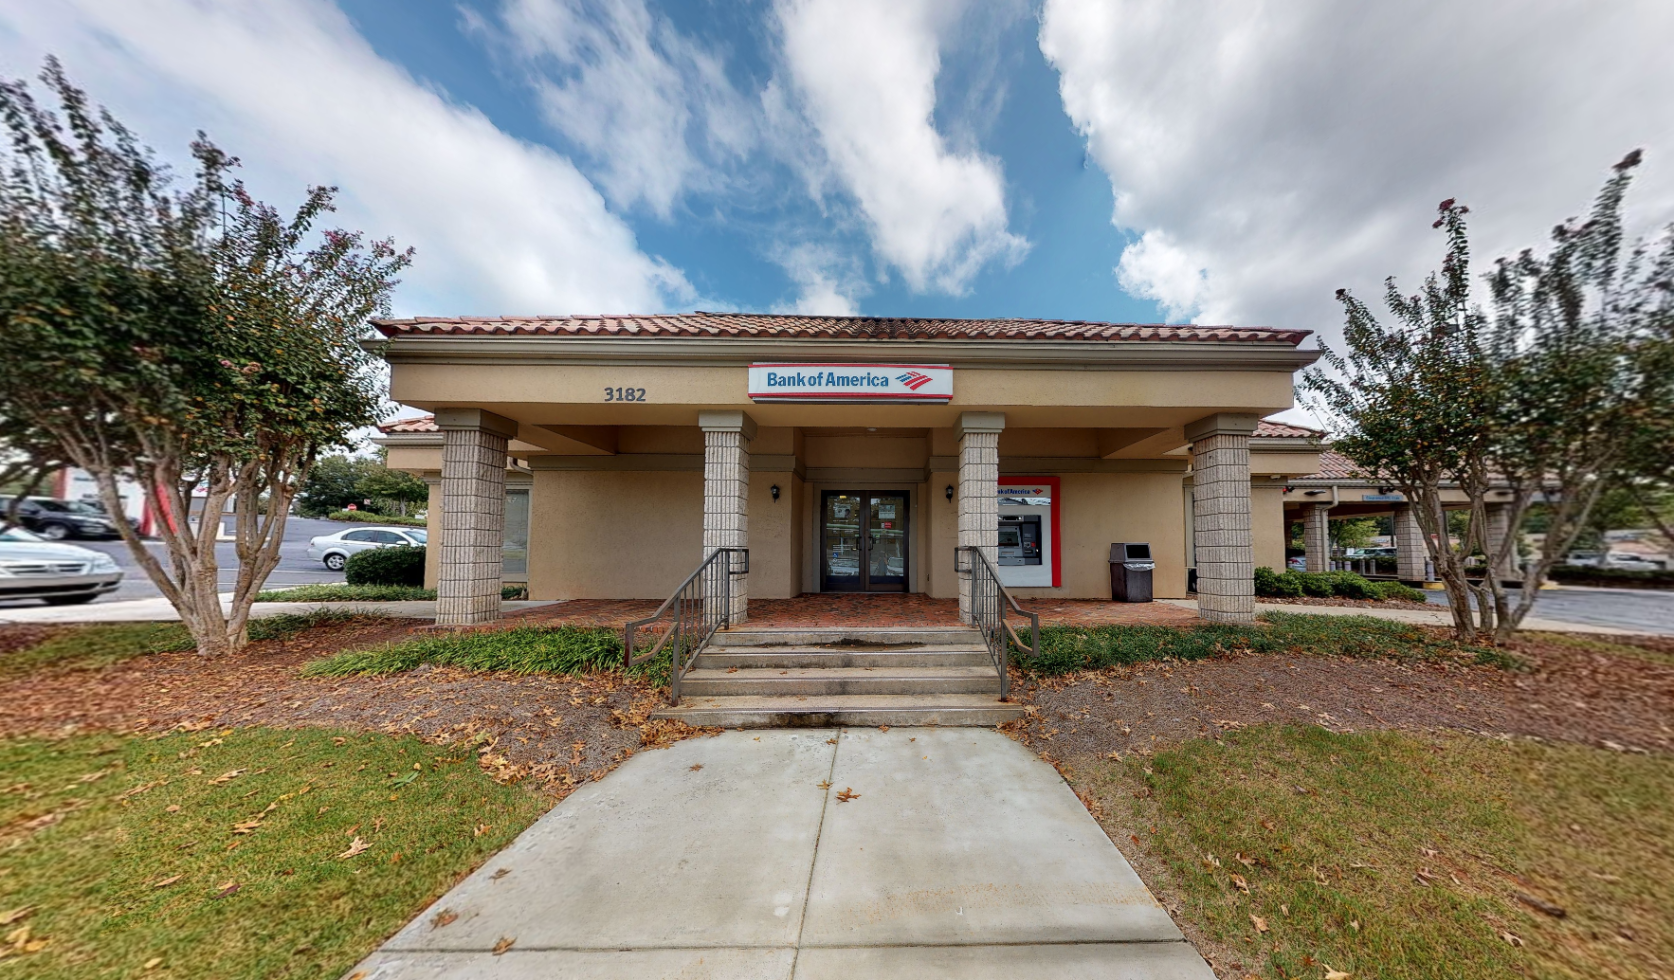 Bank of America financial center with drive-thru ATM | 3182 Johnson Ferry Rd, Marietta, GA 30062